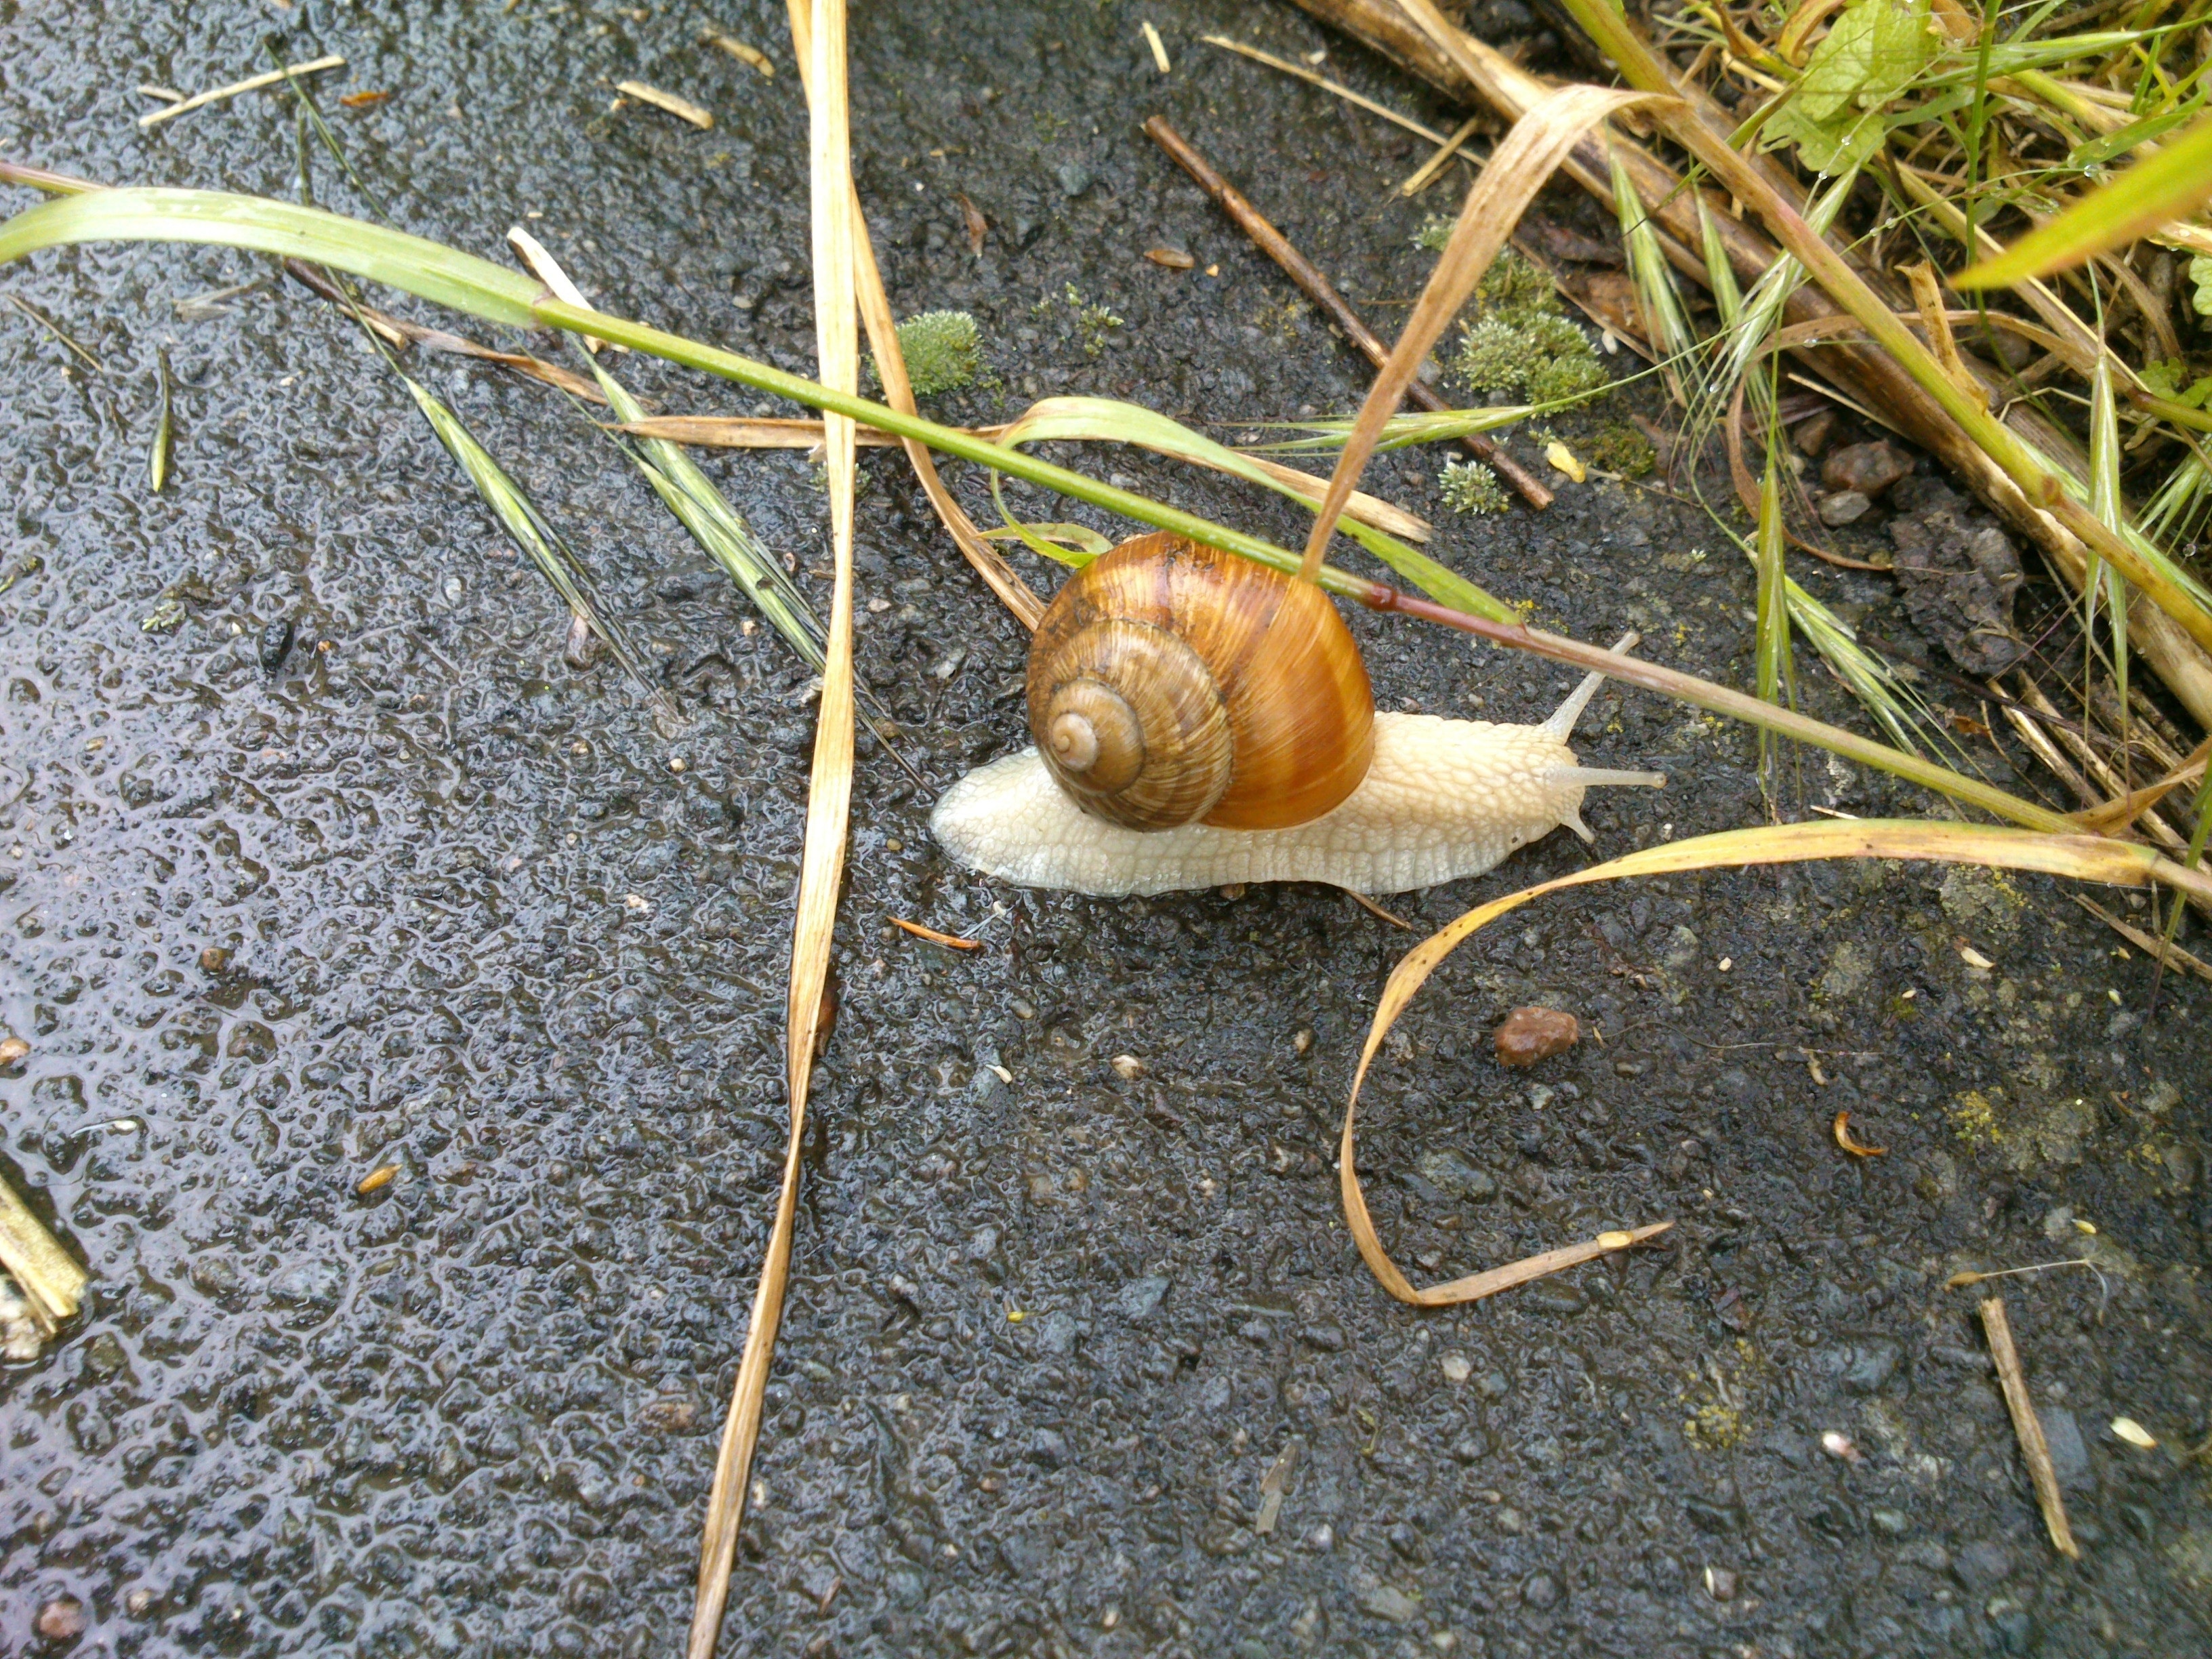 brown garden snail on gray concrete near grasses during daytime